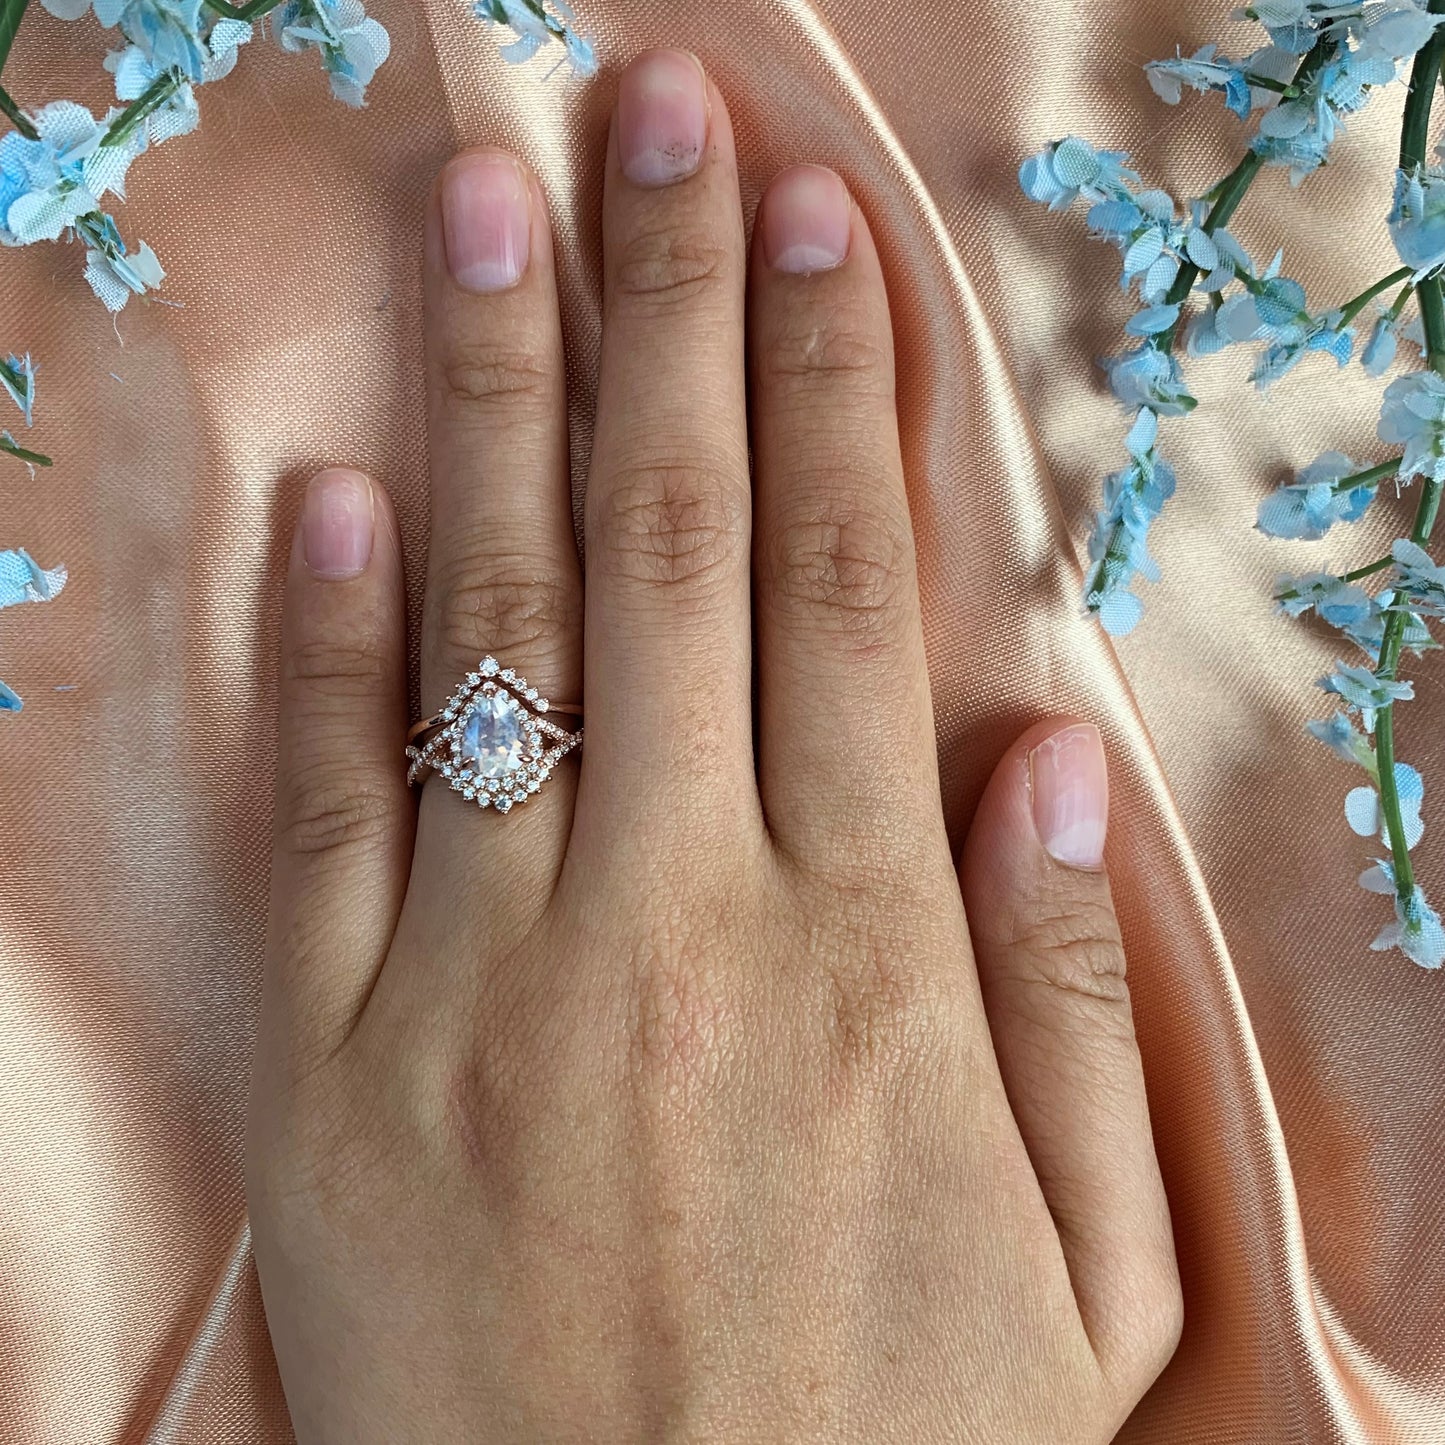 1.75 carat pear shape tear drop Moonstone Wedding Bridal Ring Set in Rose Gold